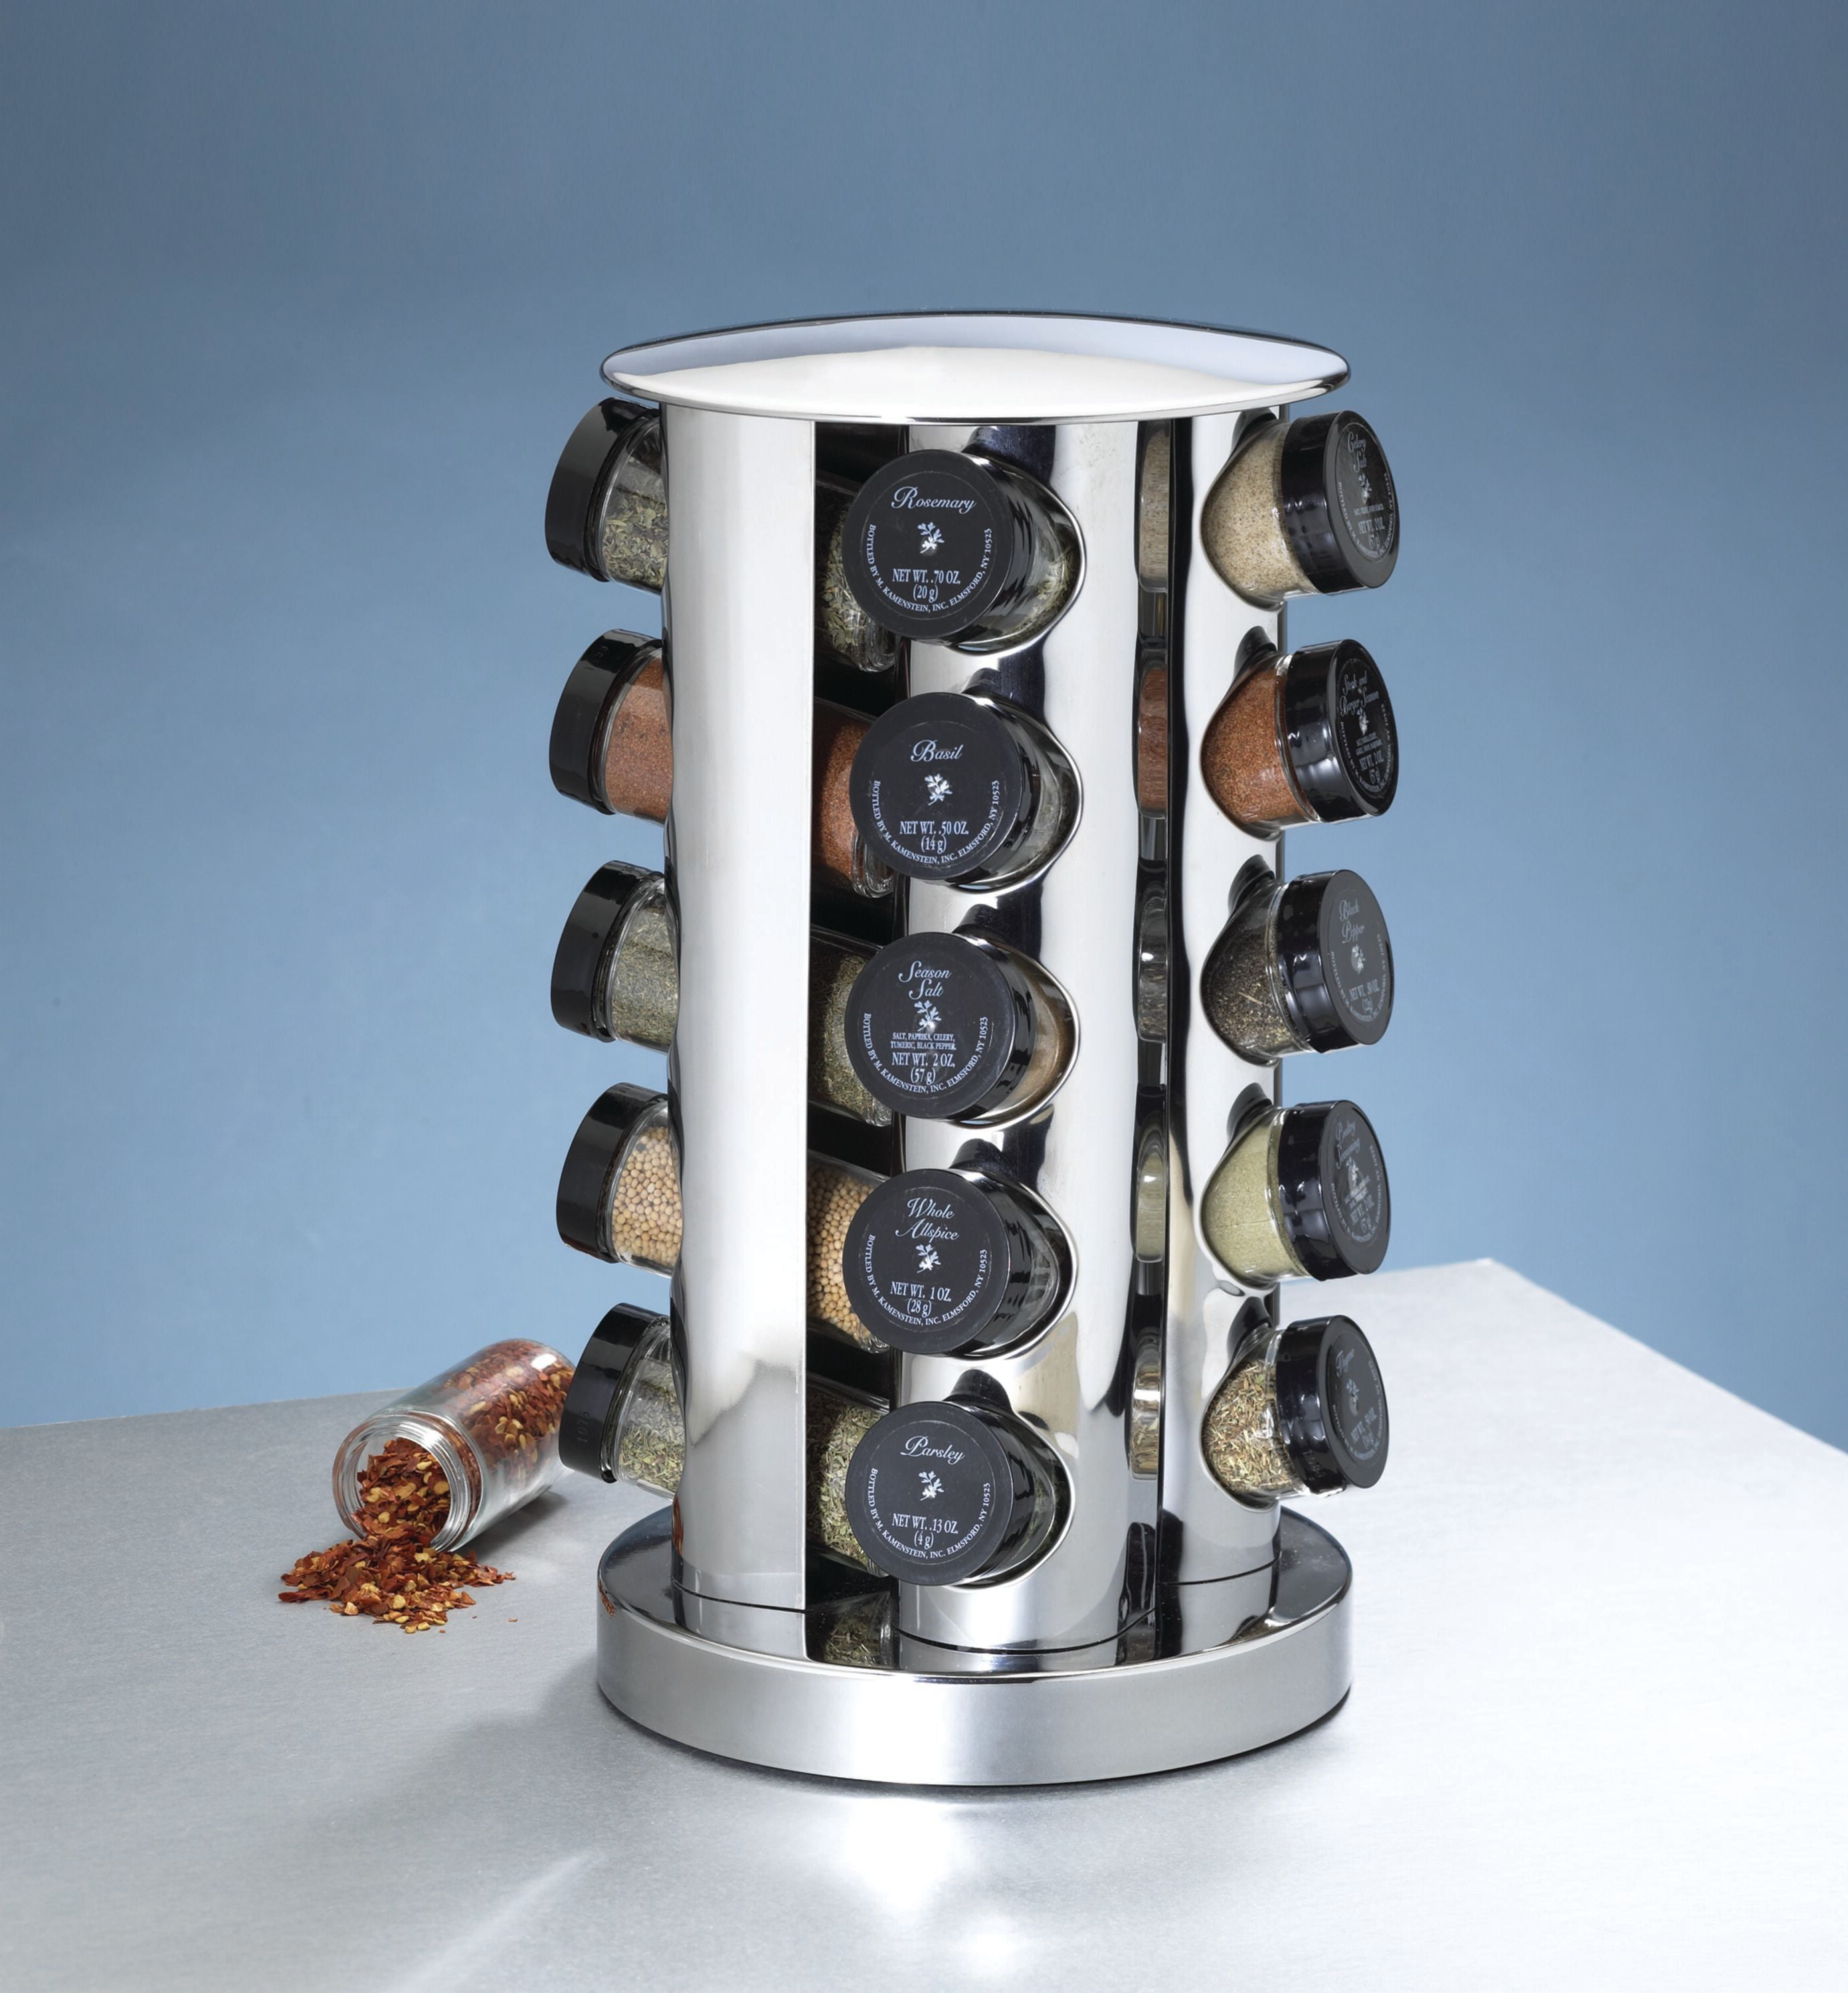 Kamenstein 20-Jar Revolving Countertop Rack Tower Organizer - 30020